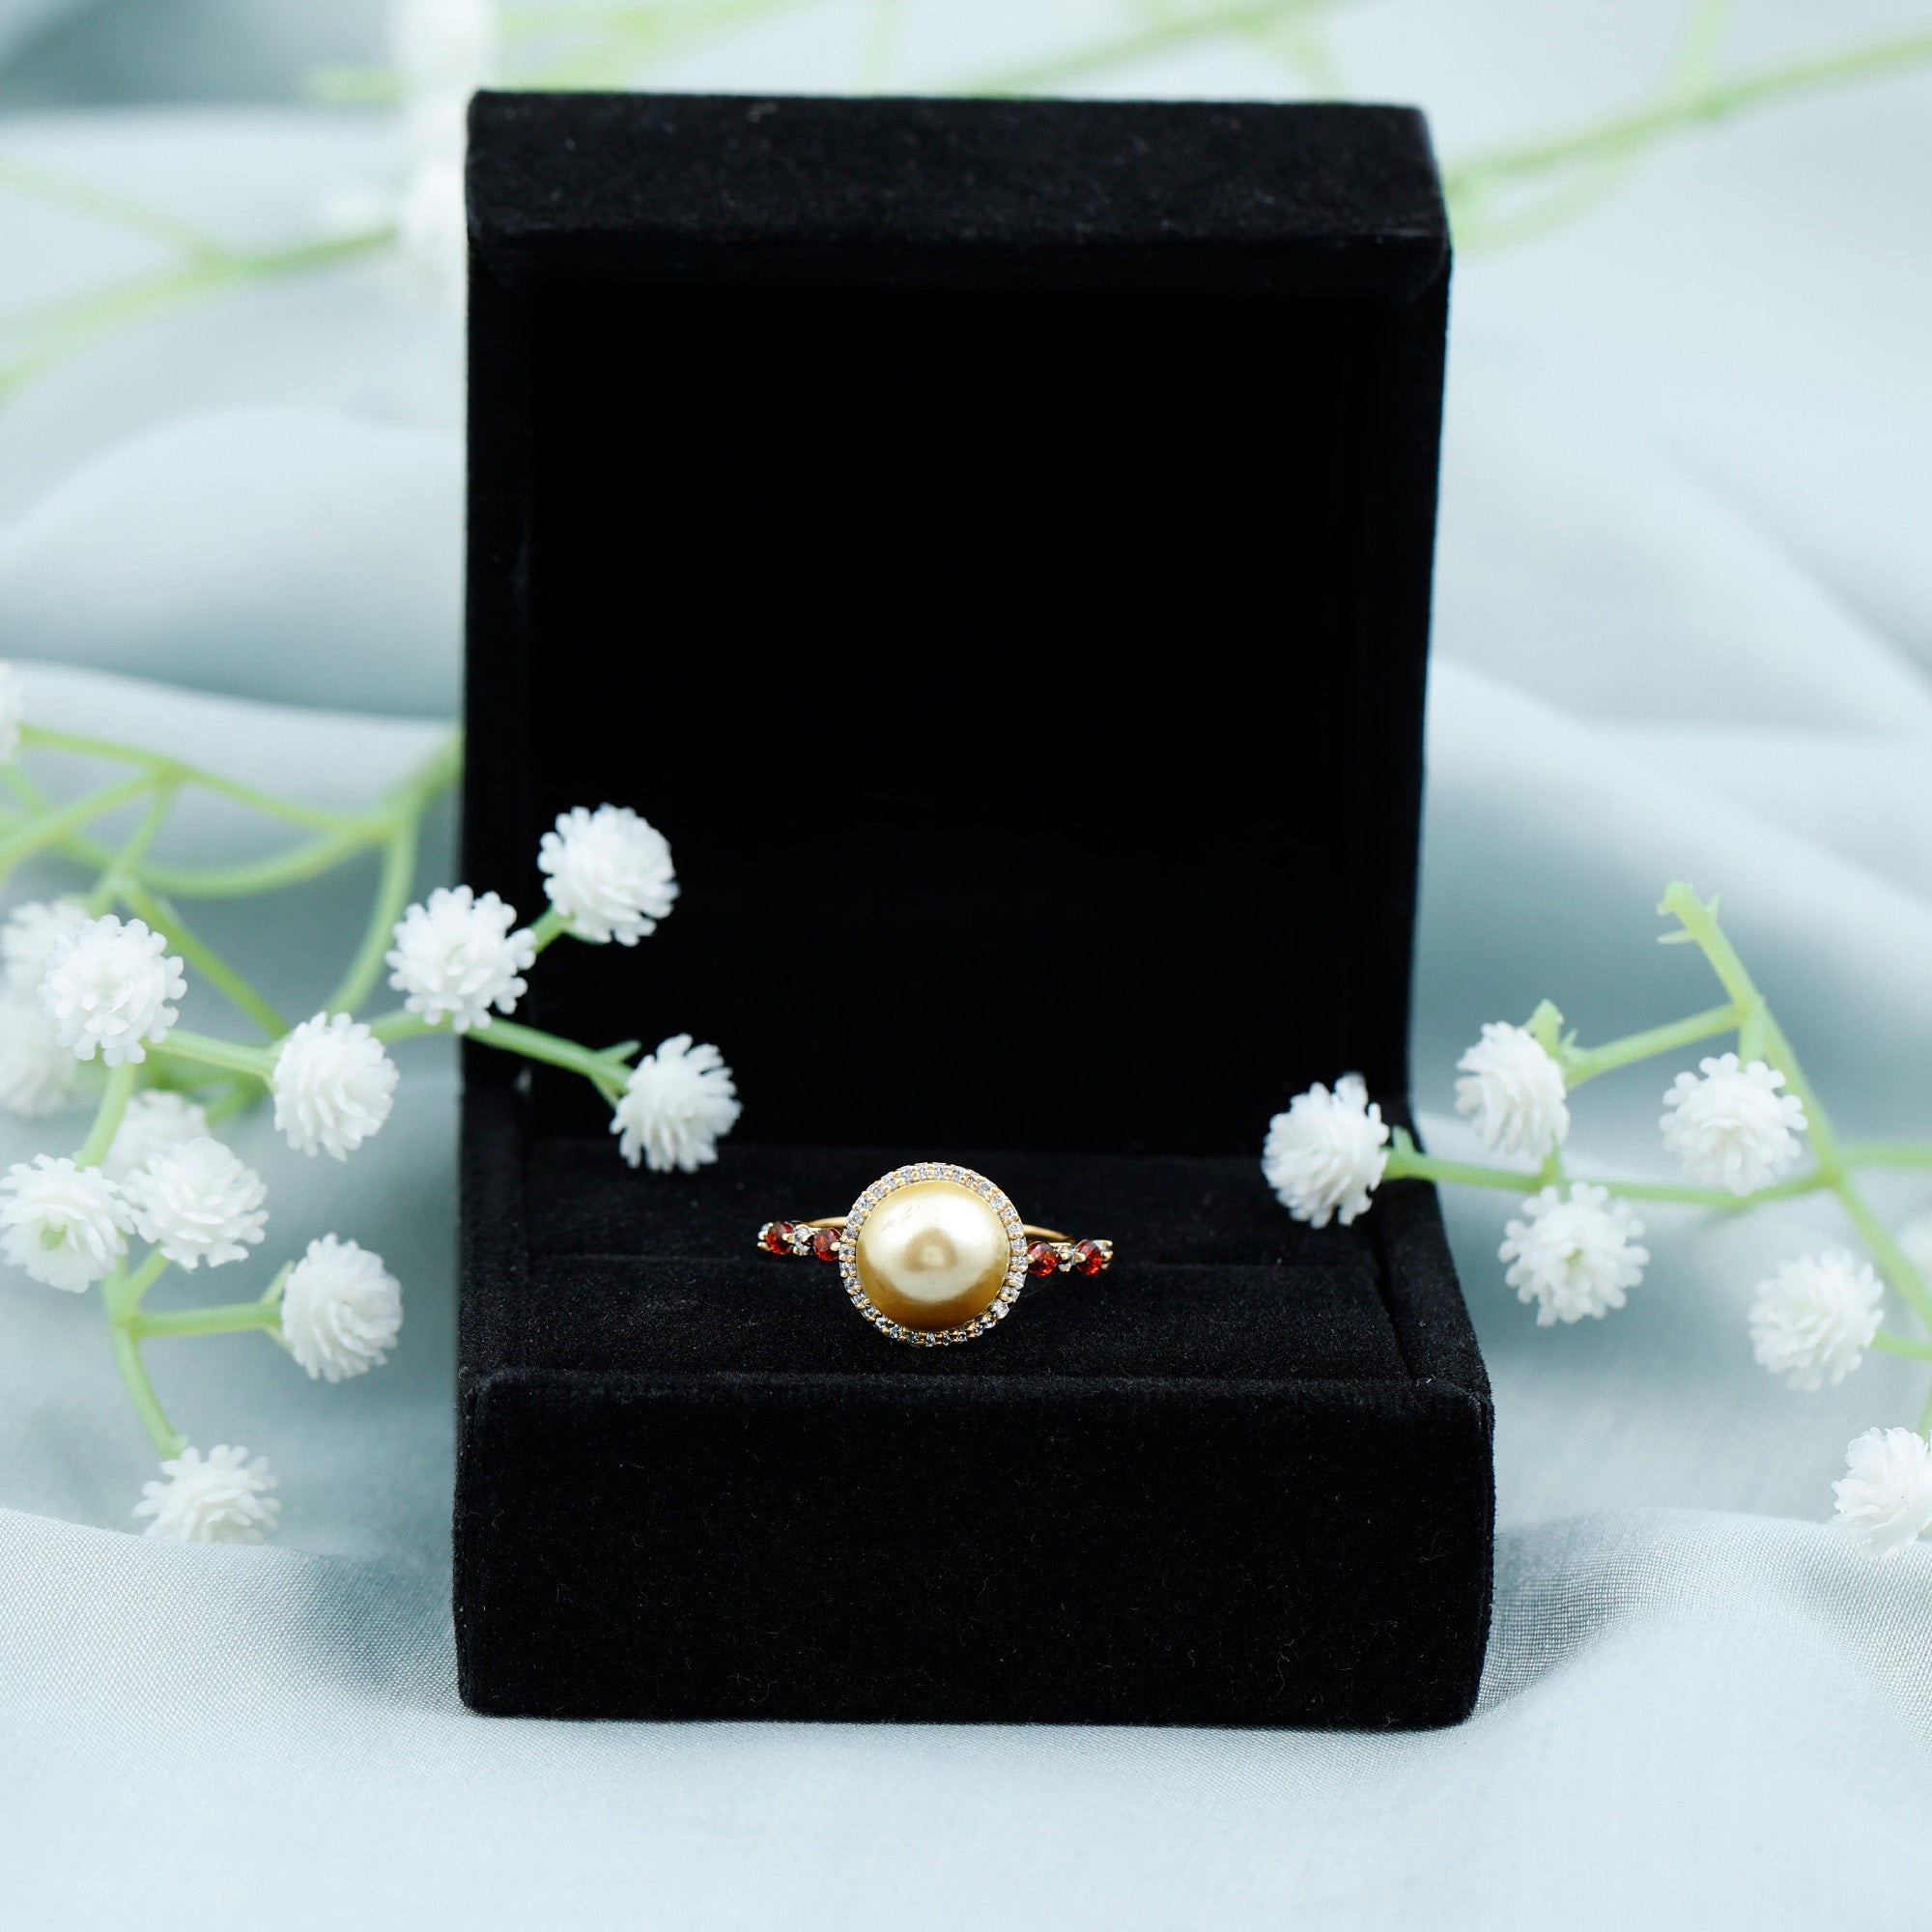 Statement South Sea Pearl Halo Ring with Diamond and Garnet South Sea Pearl-AAA Quality - Arisha Jewels